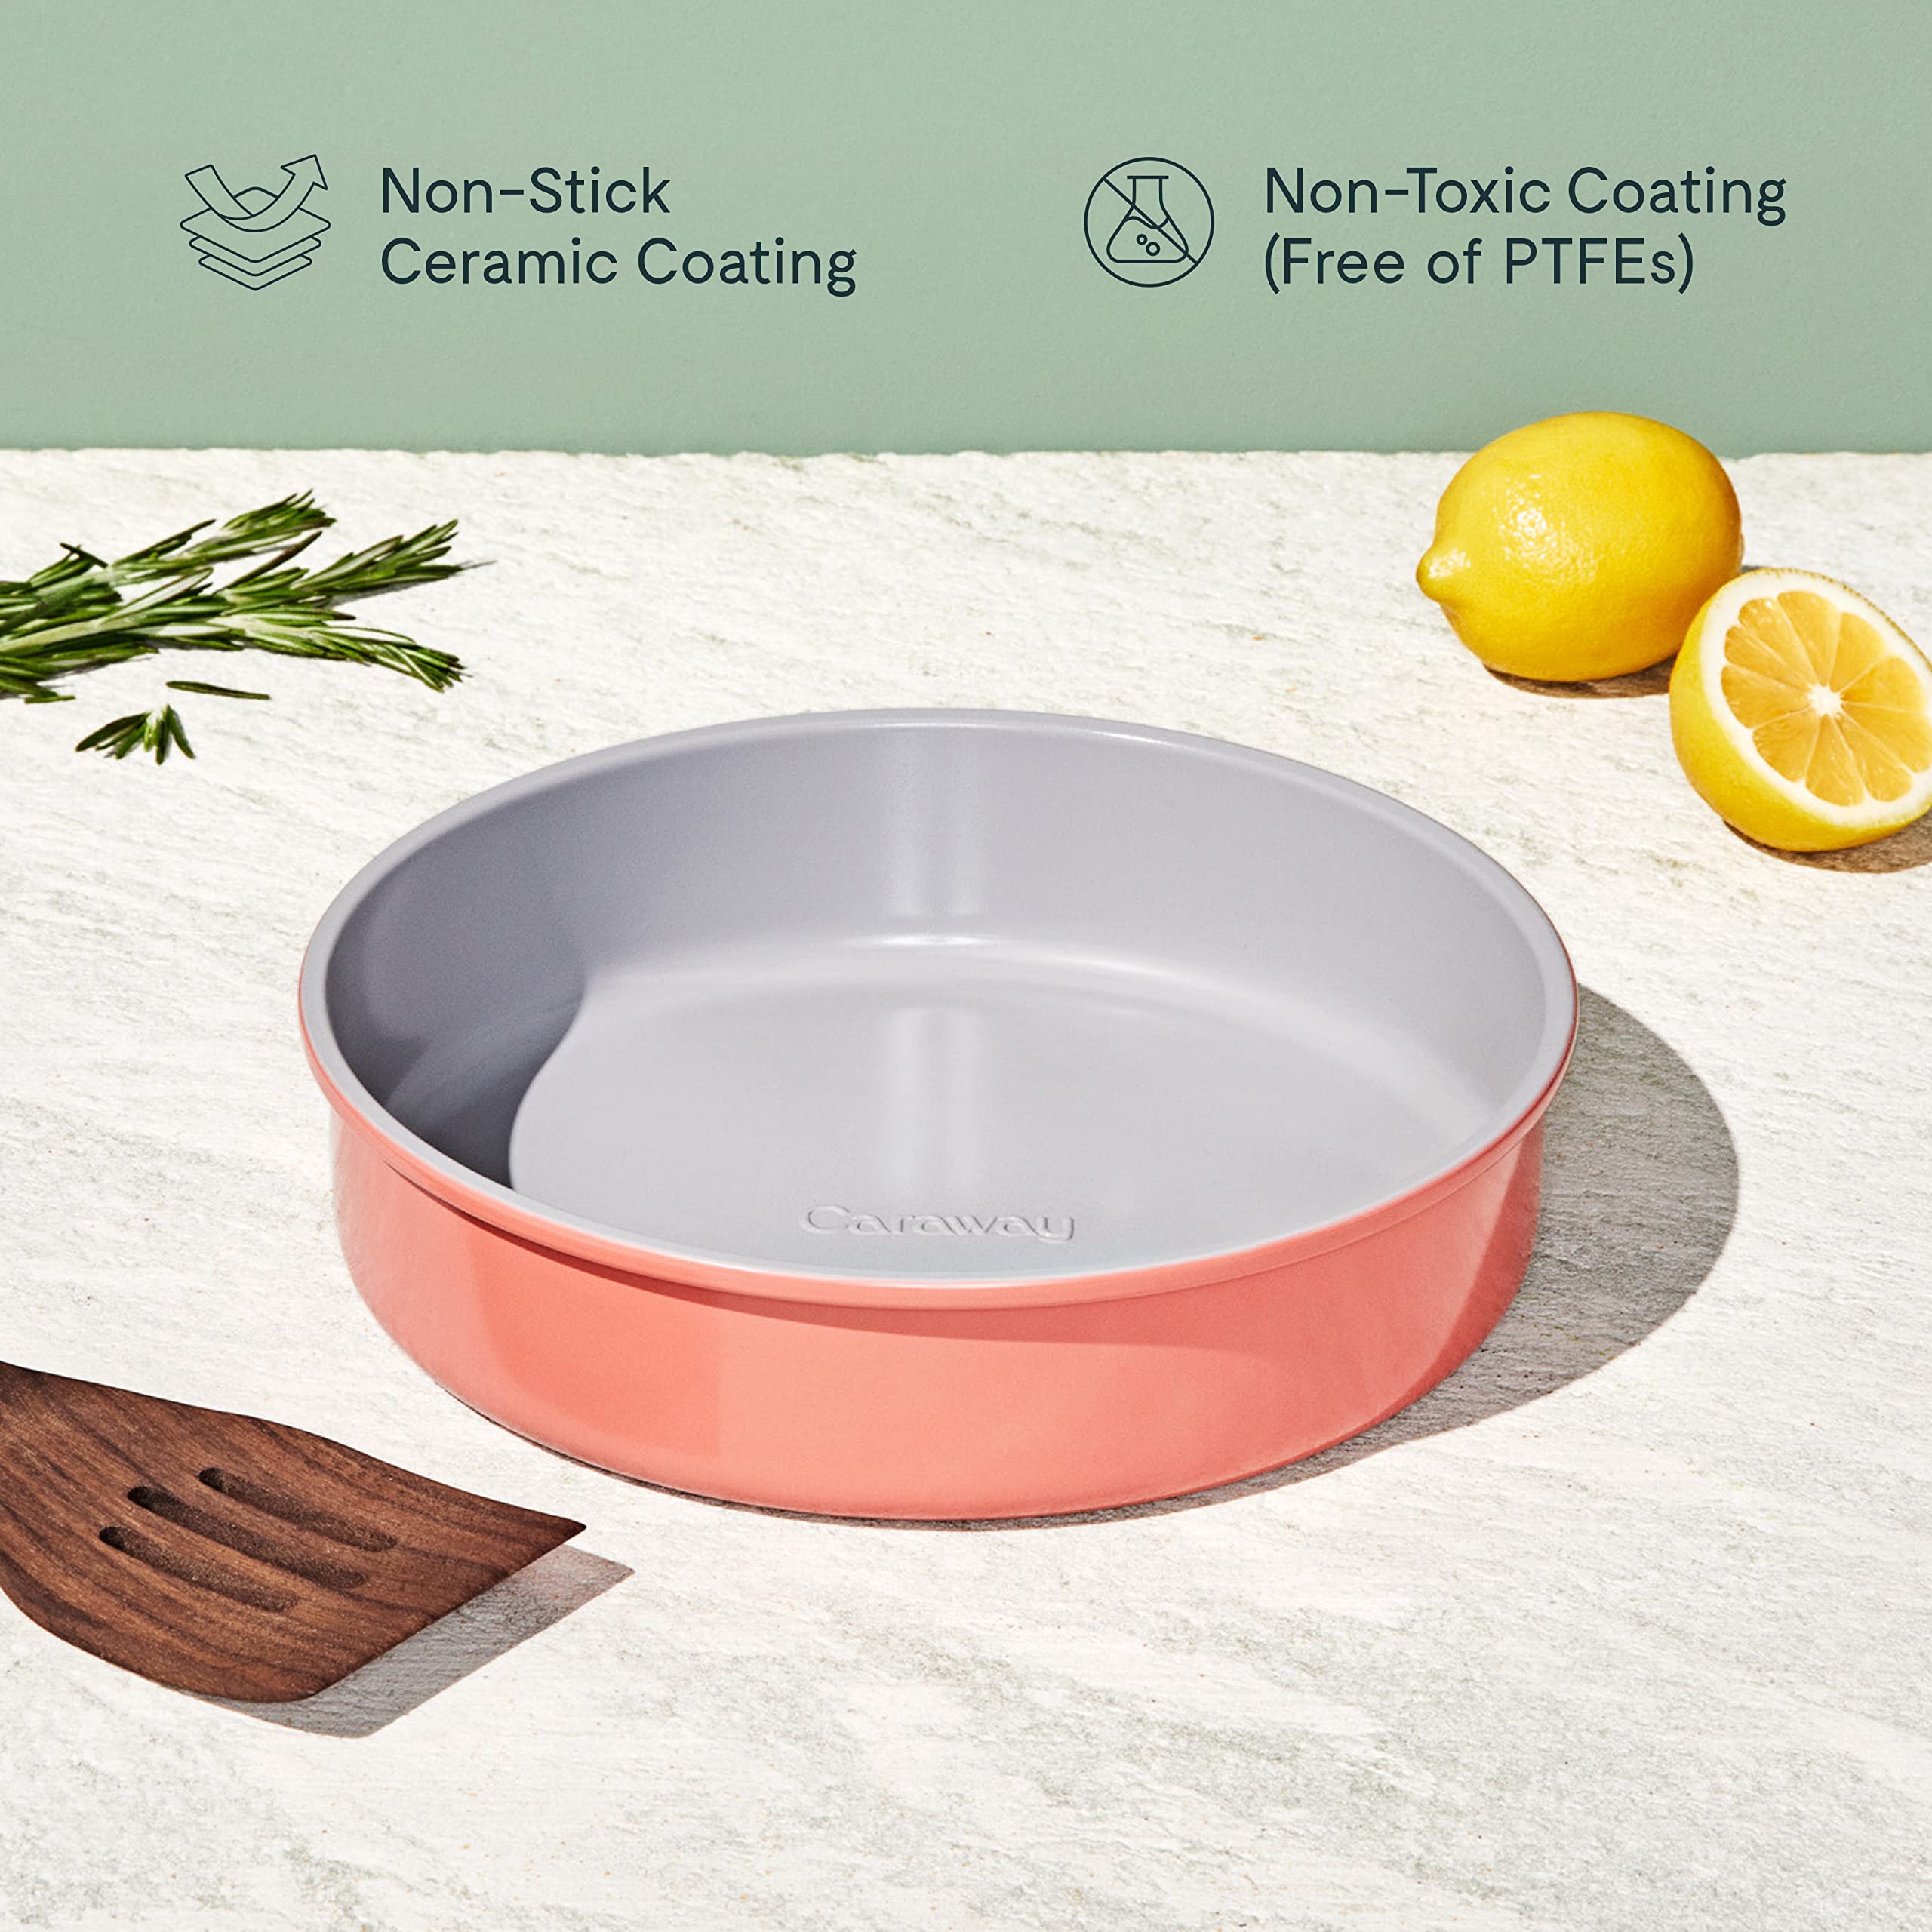 Caraway Non-Stick Ceramic 9” Circle Pan - Naturally Slick Ceramic Coating - Non-Toxic, PTFE & PFOA Free - Perfect for Birthday Cakes, Tartes, & More - Perracotta